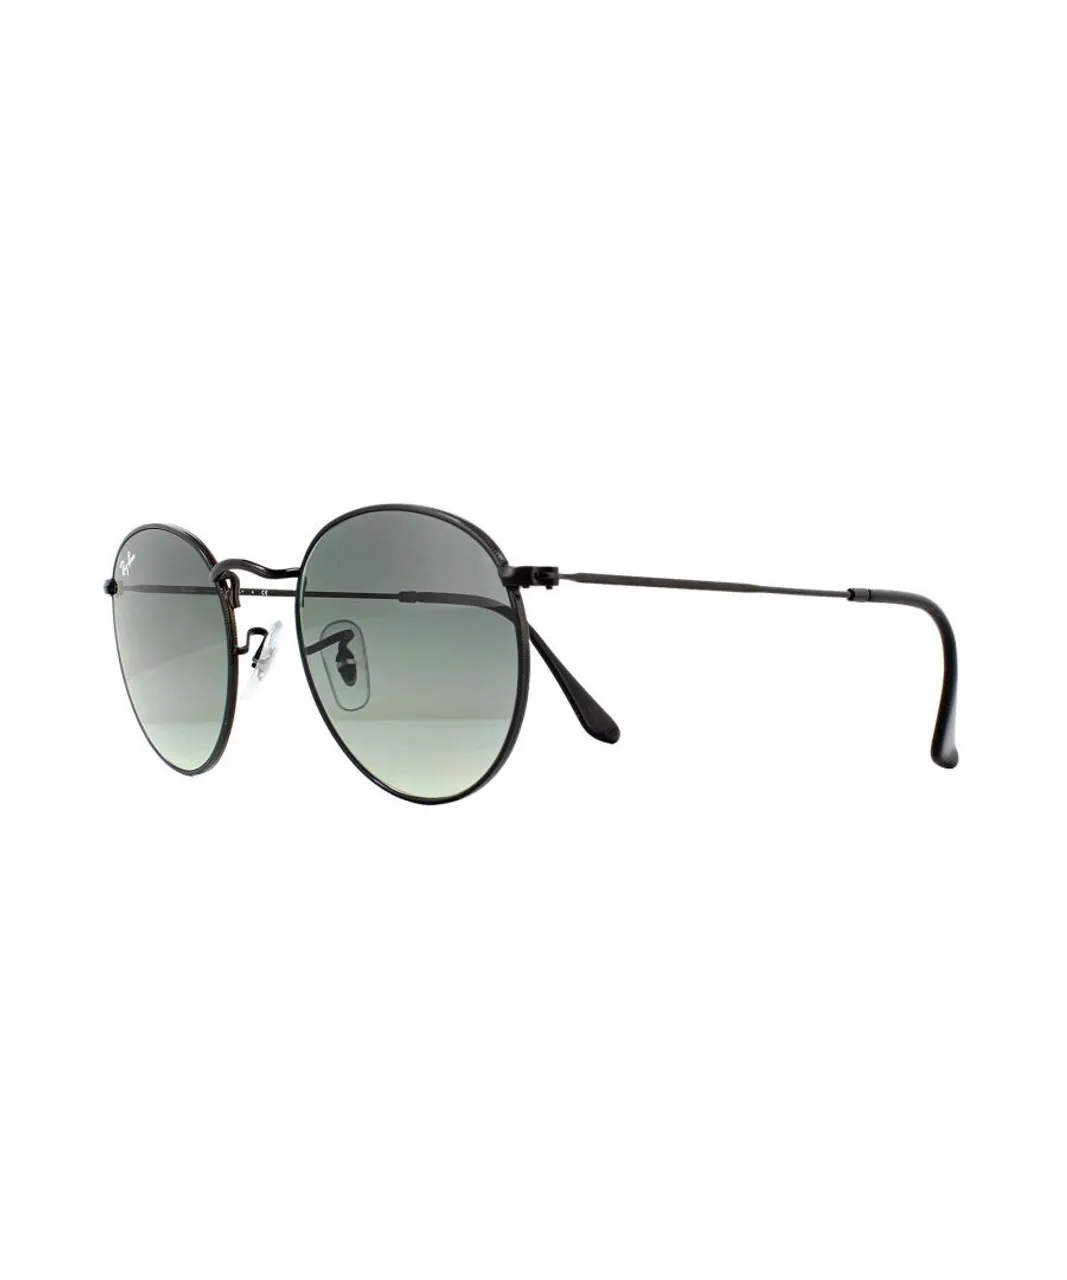 Ray-Ban Unisex Sunglasses Round Flat Lenses 3447N 002/71 Black Grey Gradient 50mm Metal - One